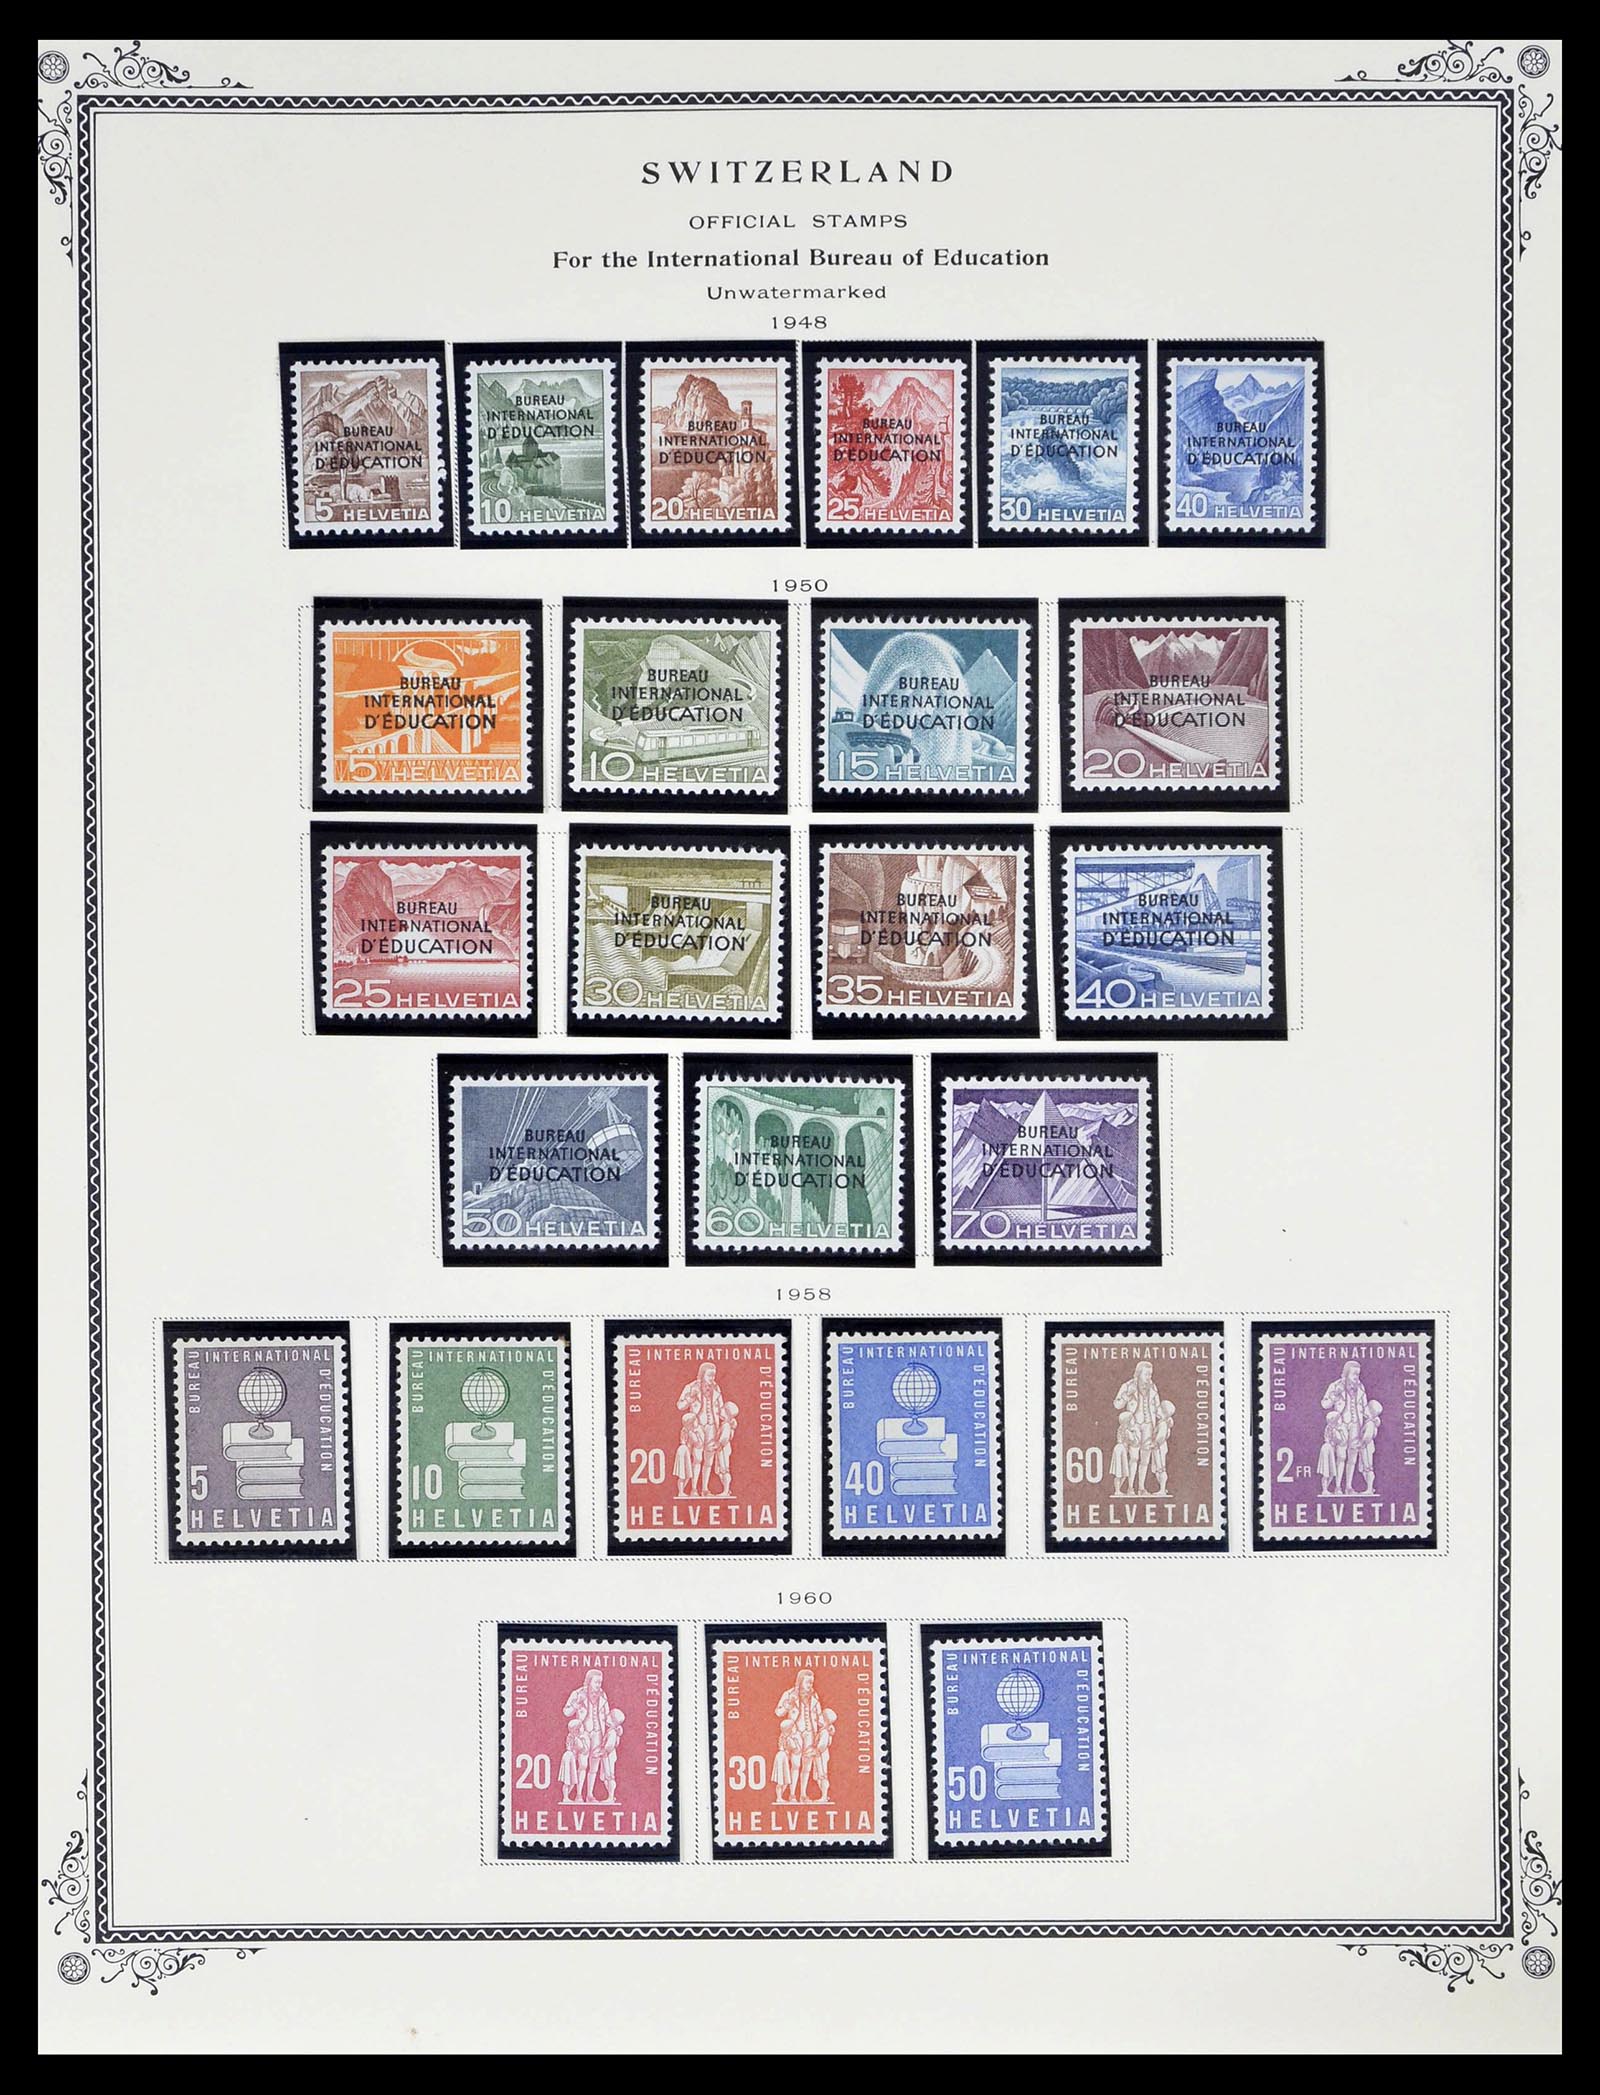 39178 0251 - Stamp collection 39178 Switzerland 1850-1989.